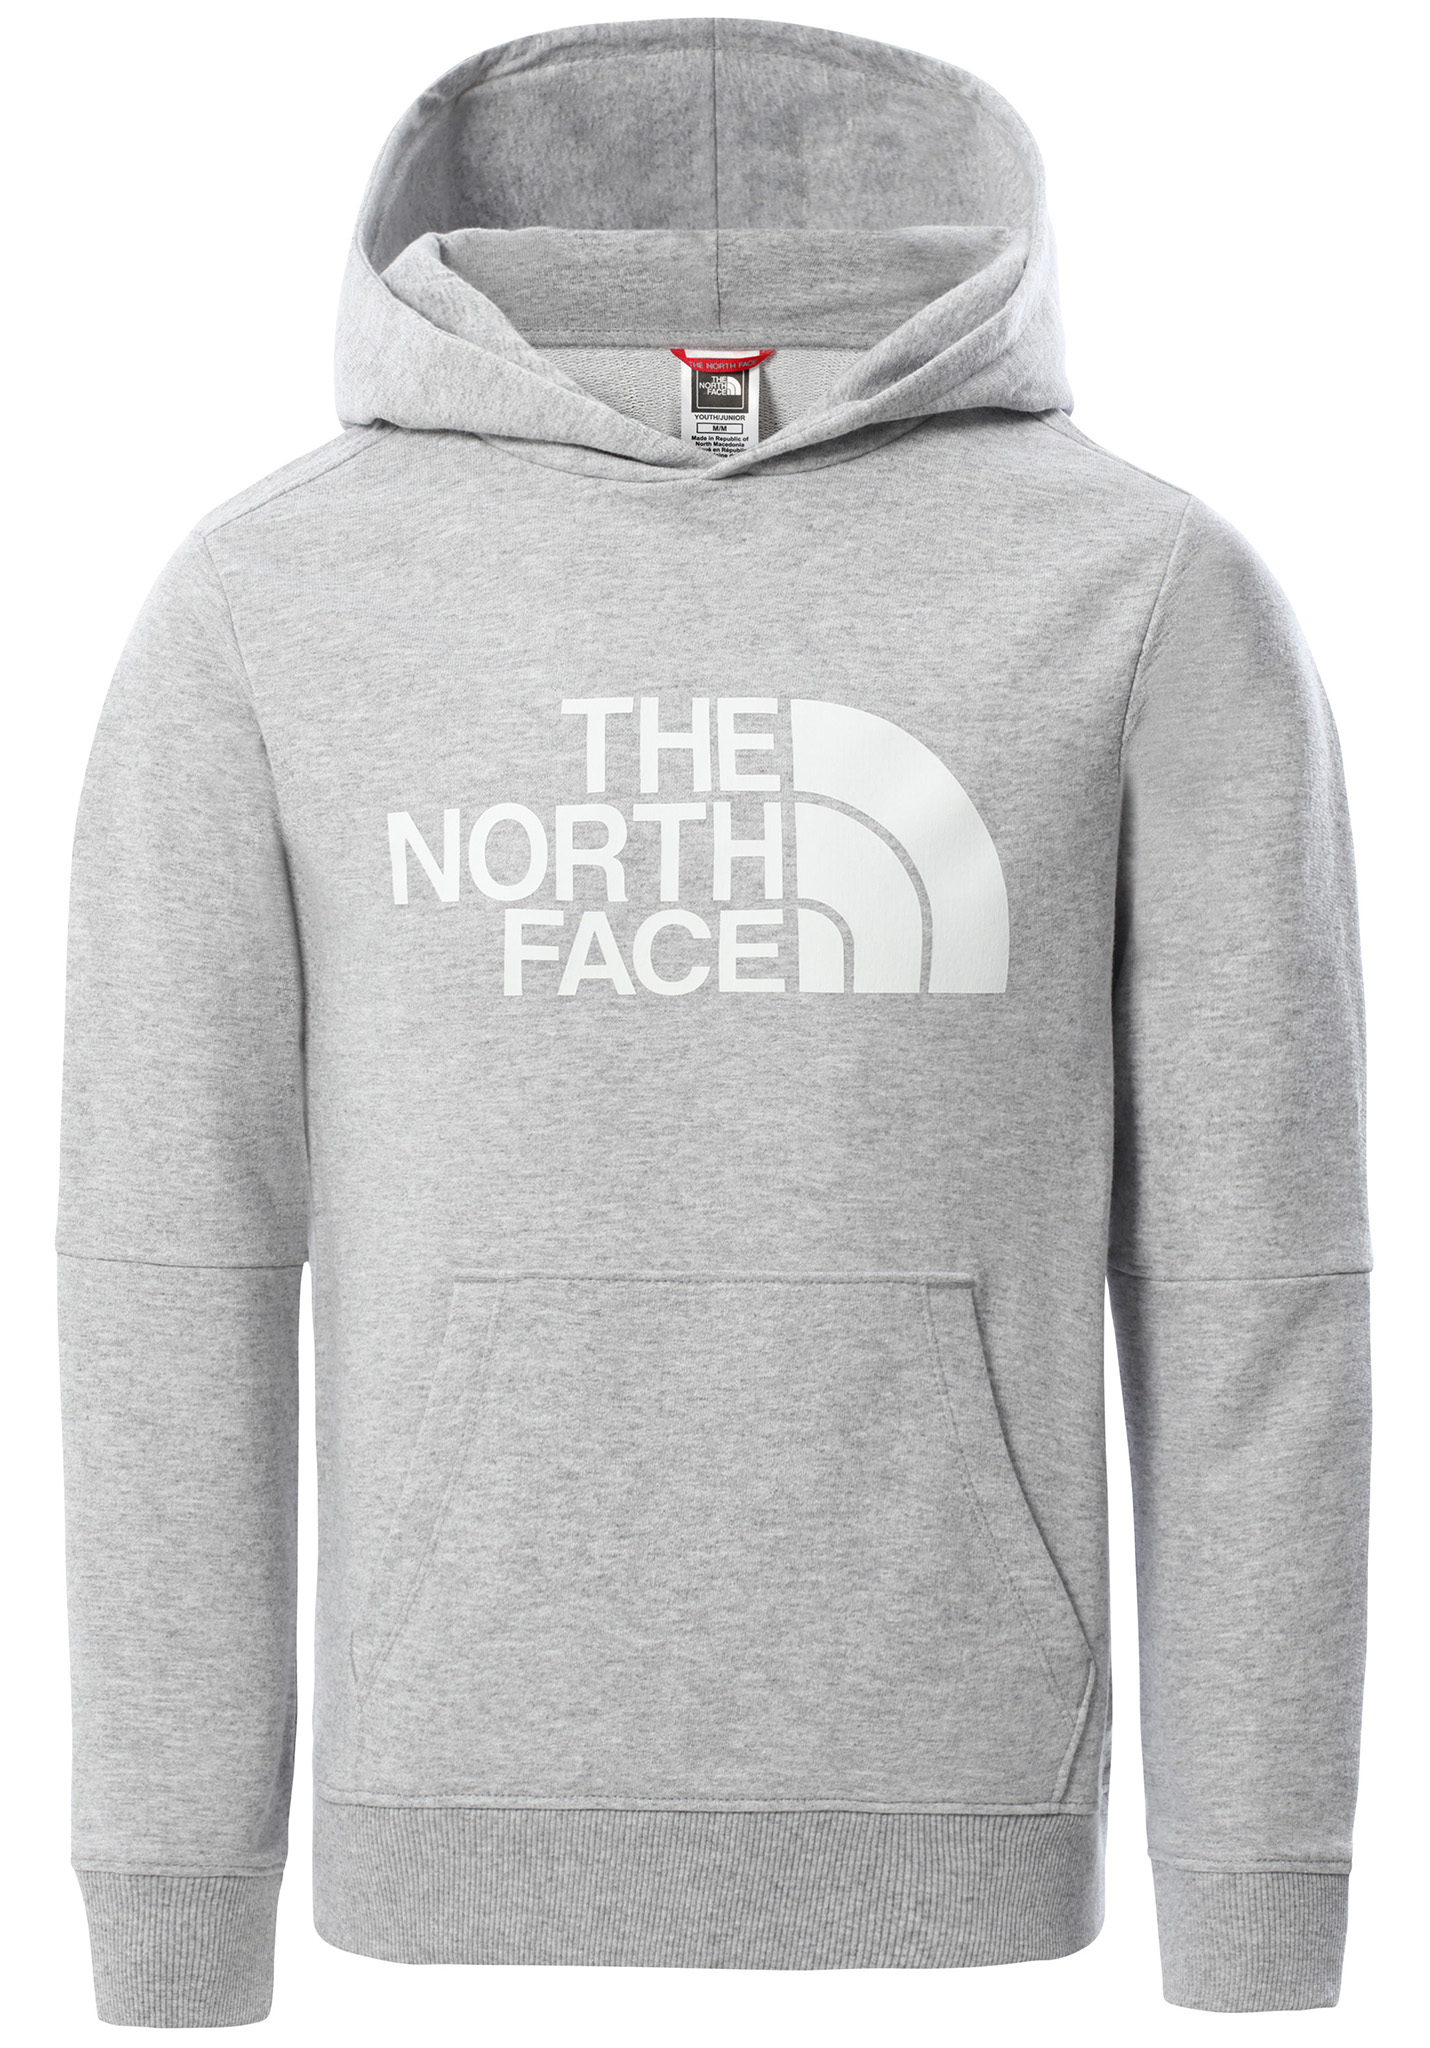 The North Face Drew Peak Light Hoodie tnf hellgrau heather XL